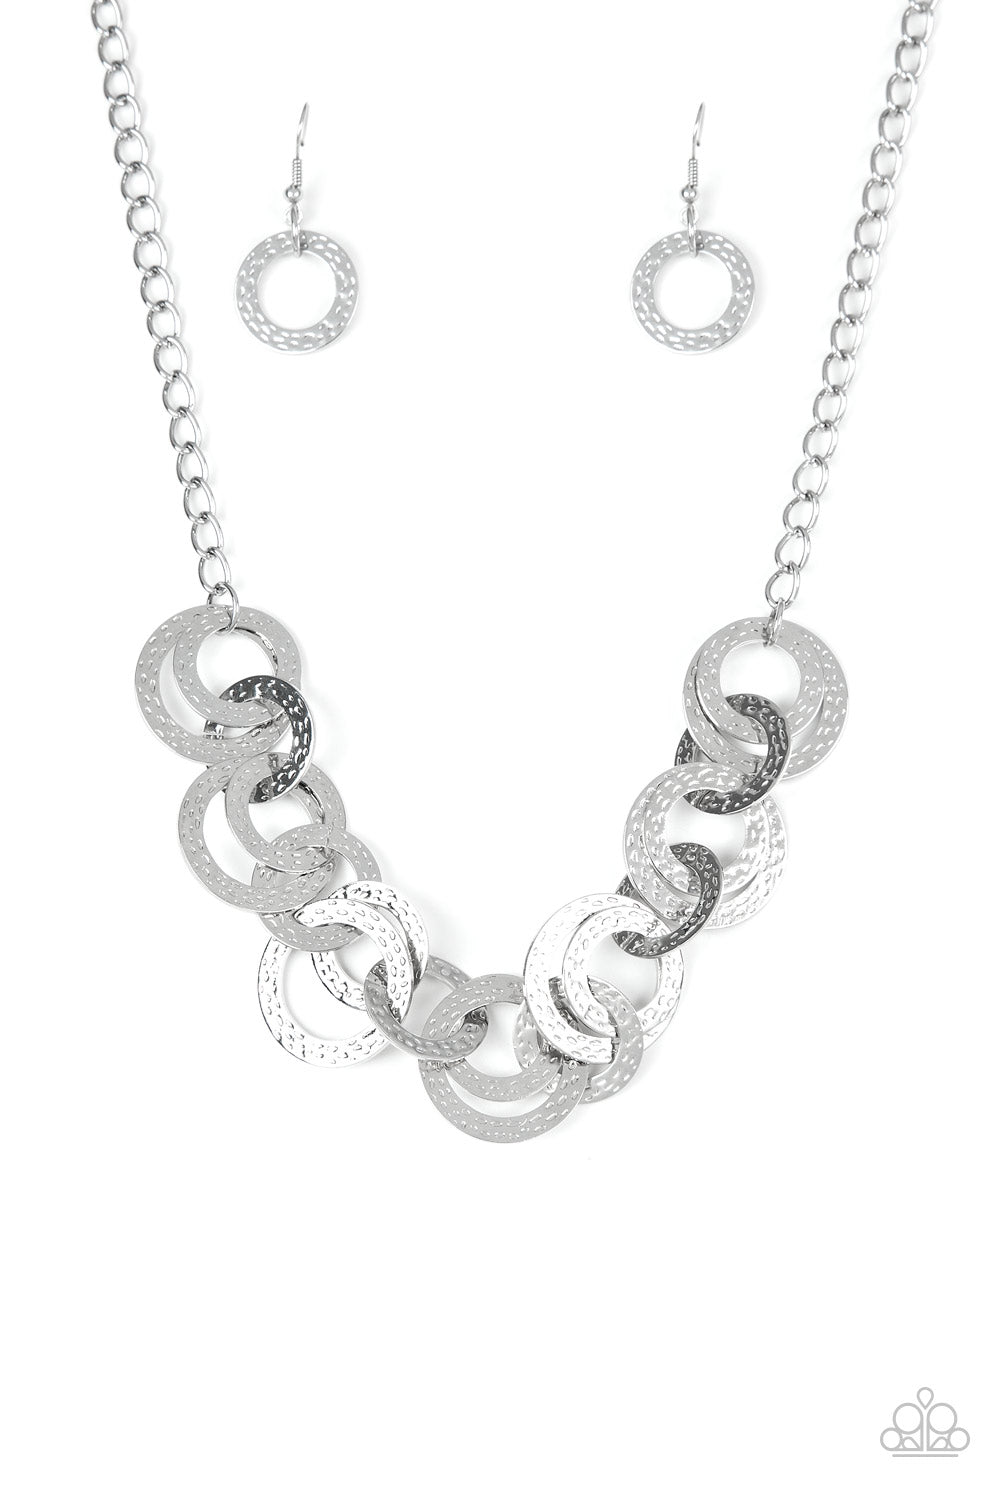 Treasure Tease - Silver Necklace Set - Princess Glam Shop